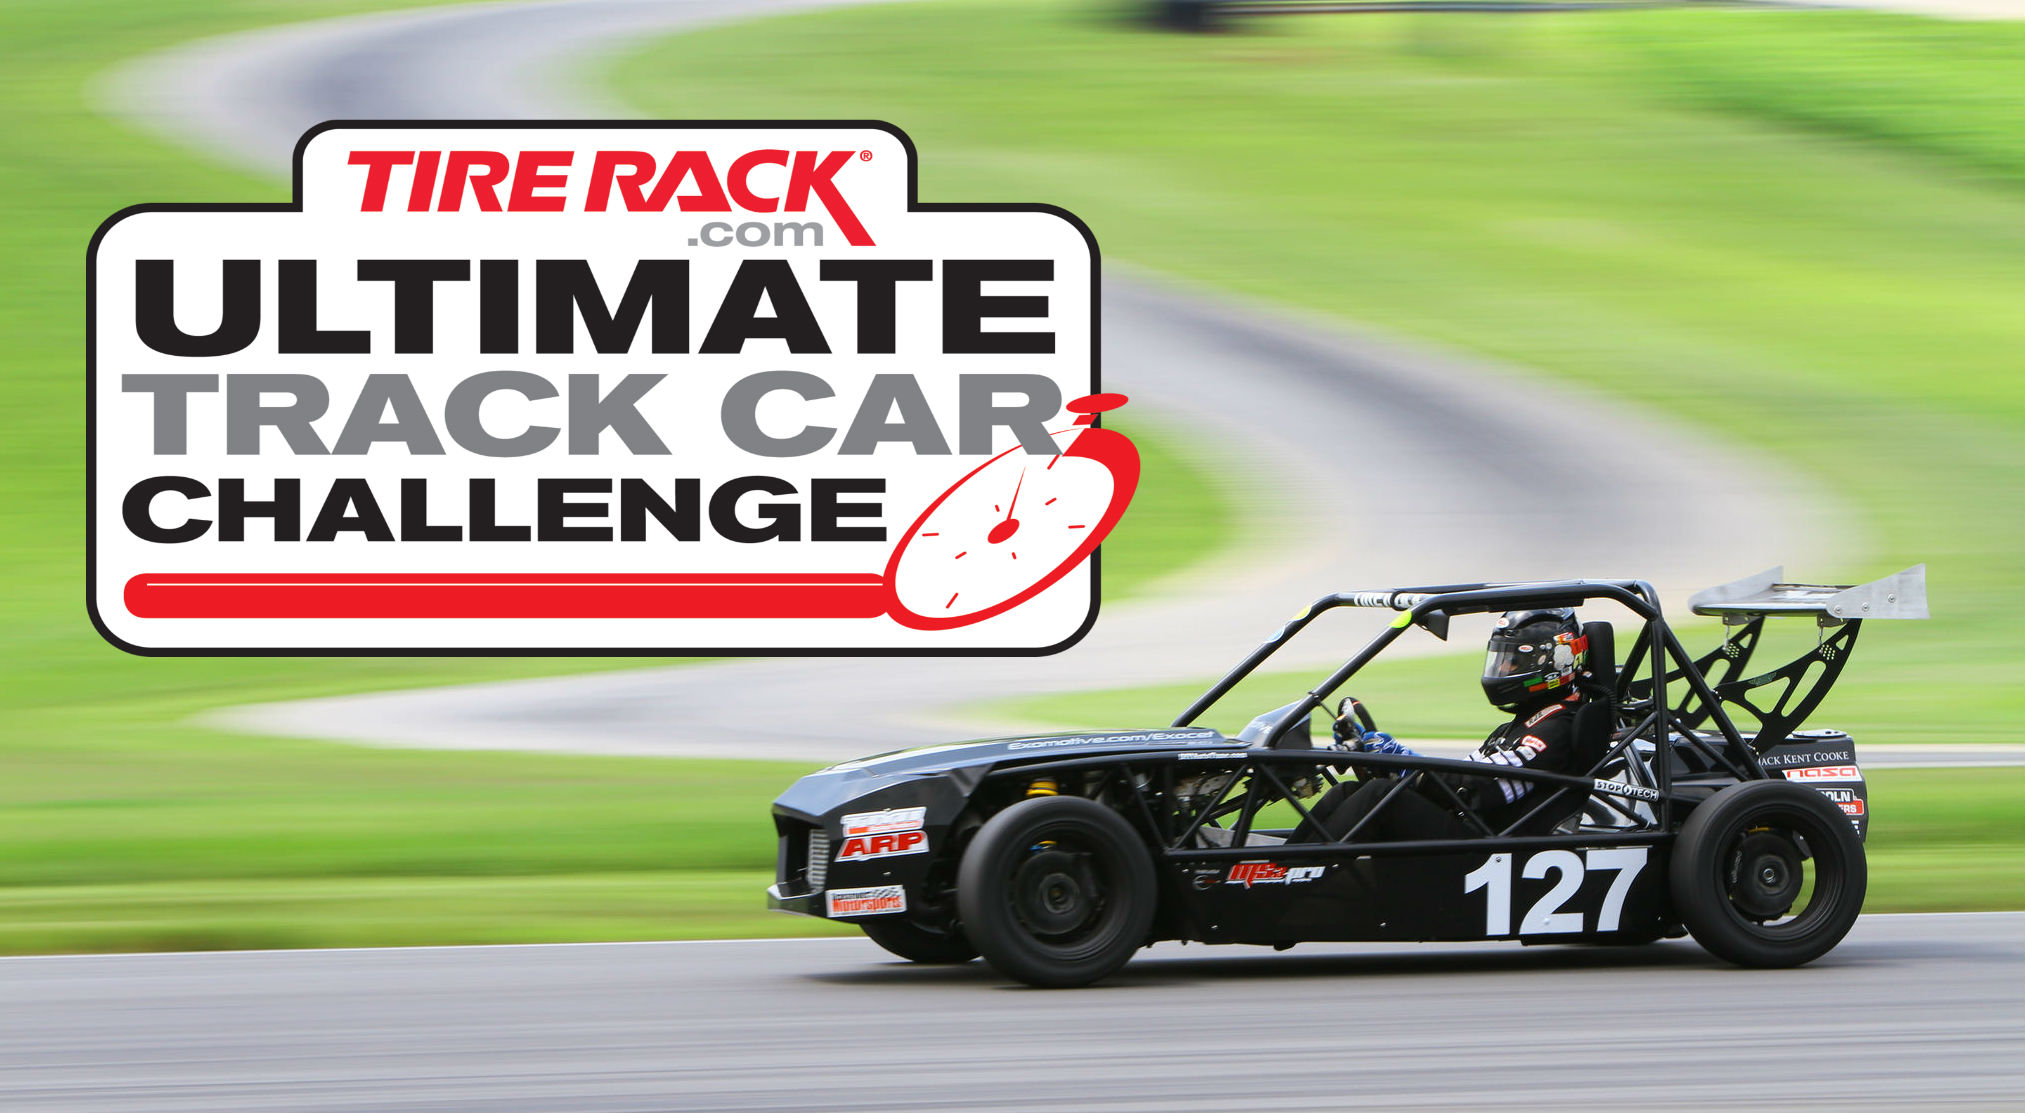 Tire Rack Ultimate Track Car Challenge